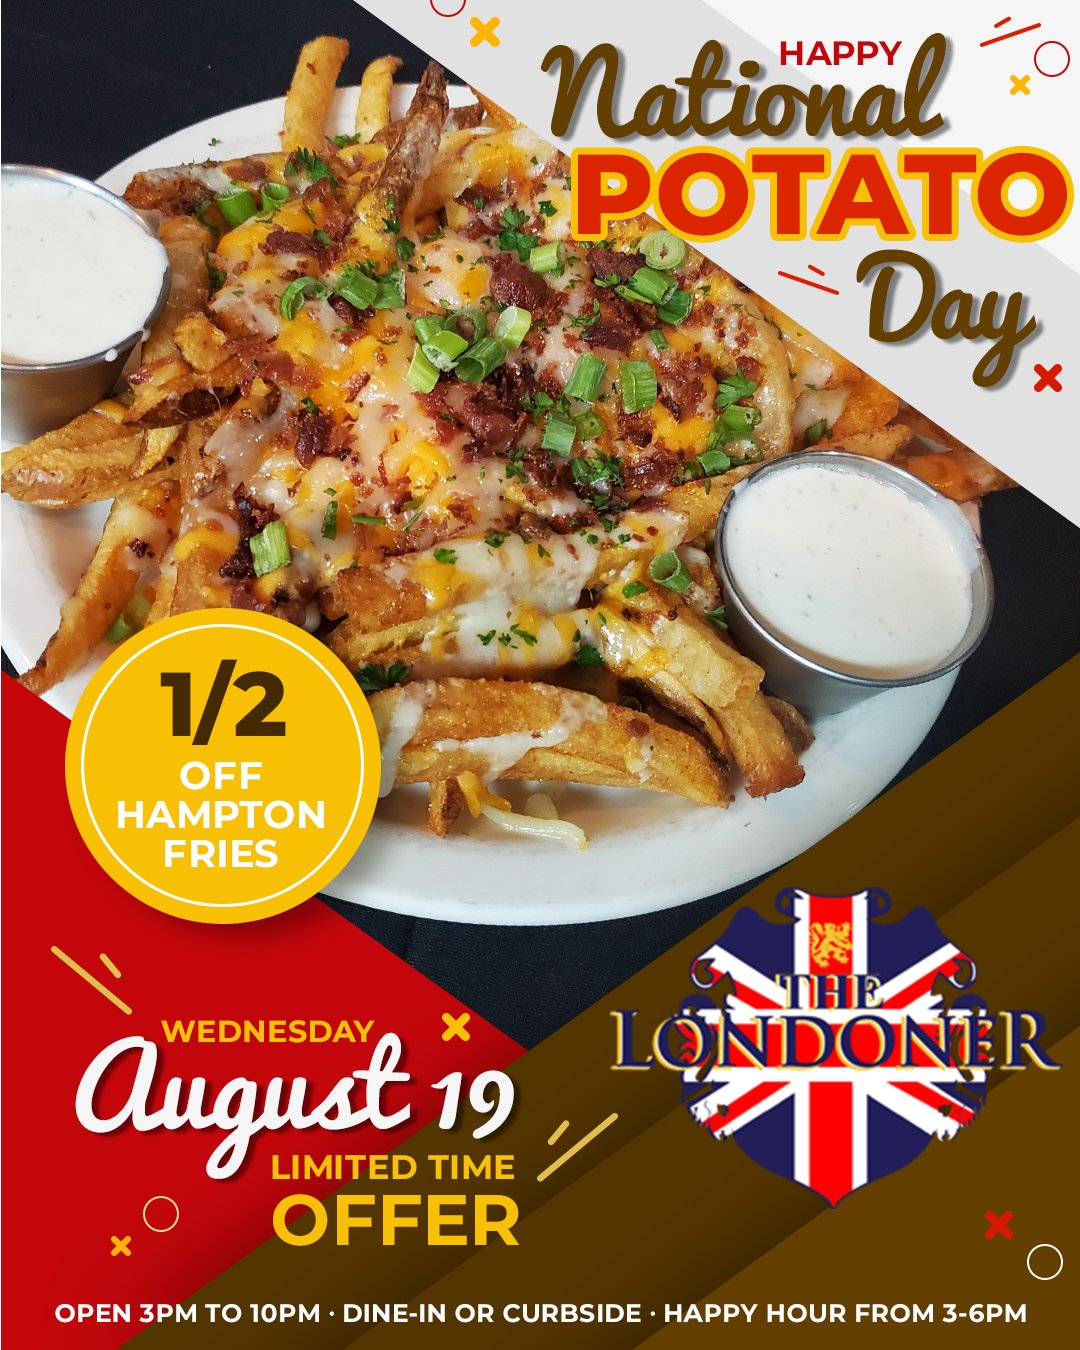 National Potato Day promotion